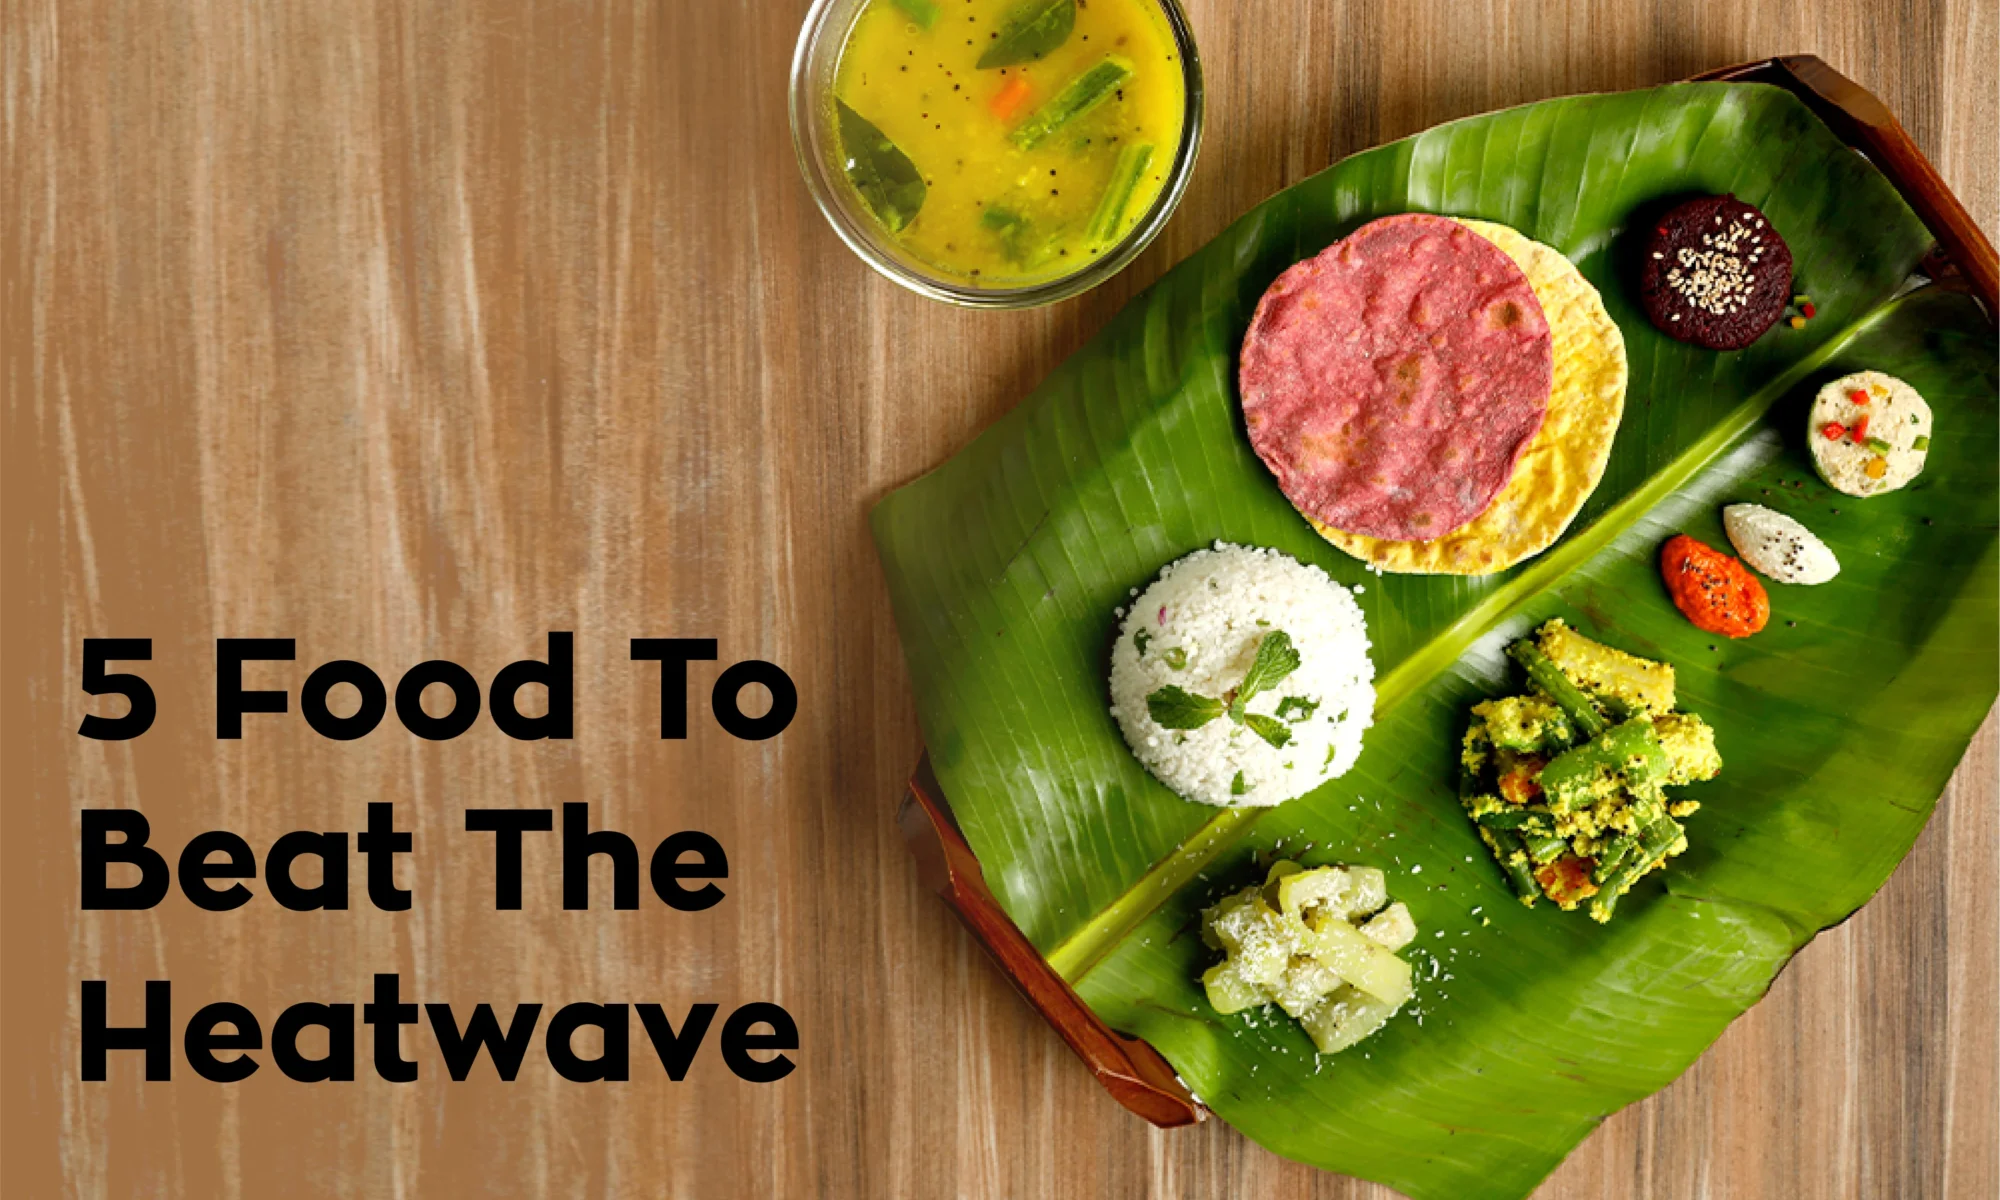 Foods To beat the Heatwave